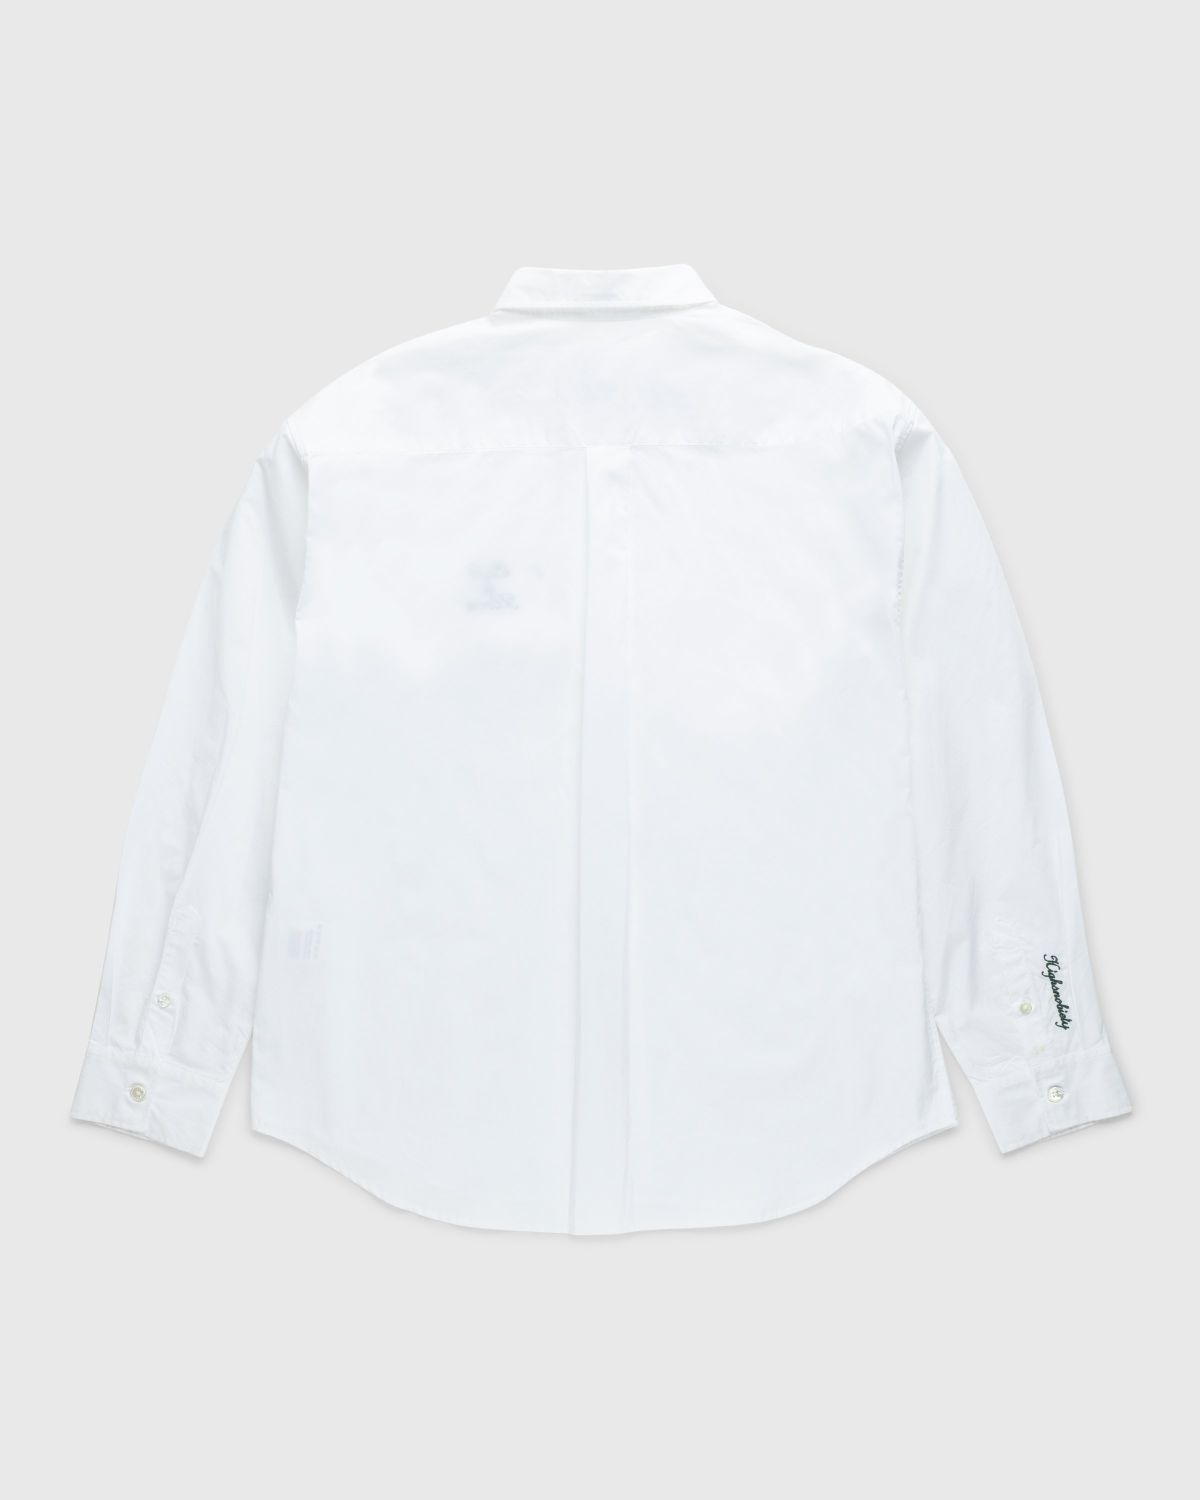 Café de Flore x Highsnobiety – Not In Paris 4 Poplin Shirt White - Shirts - White - Image 2